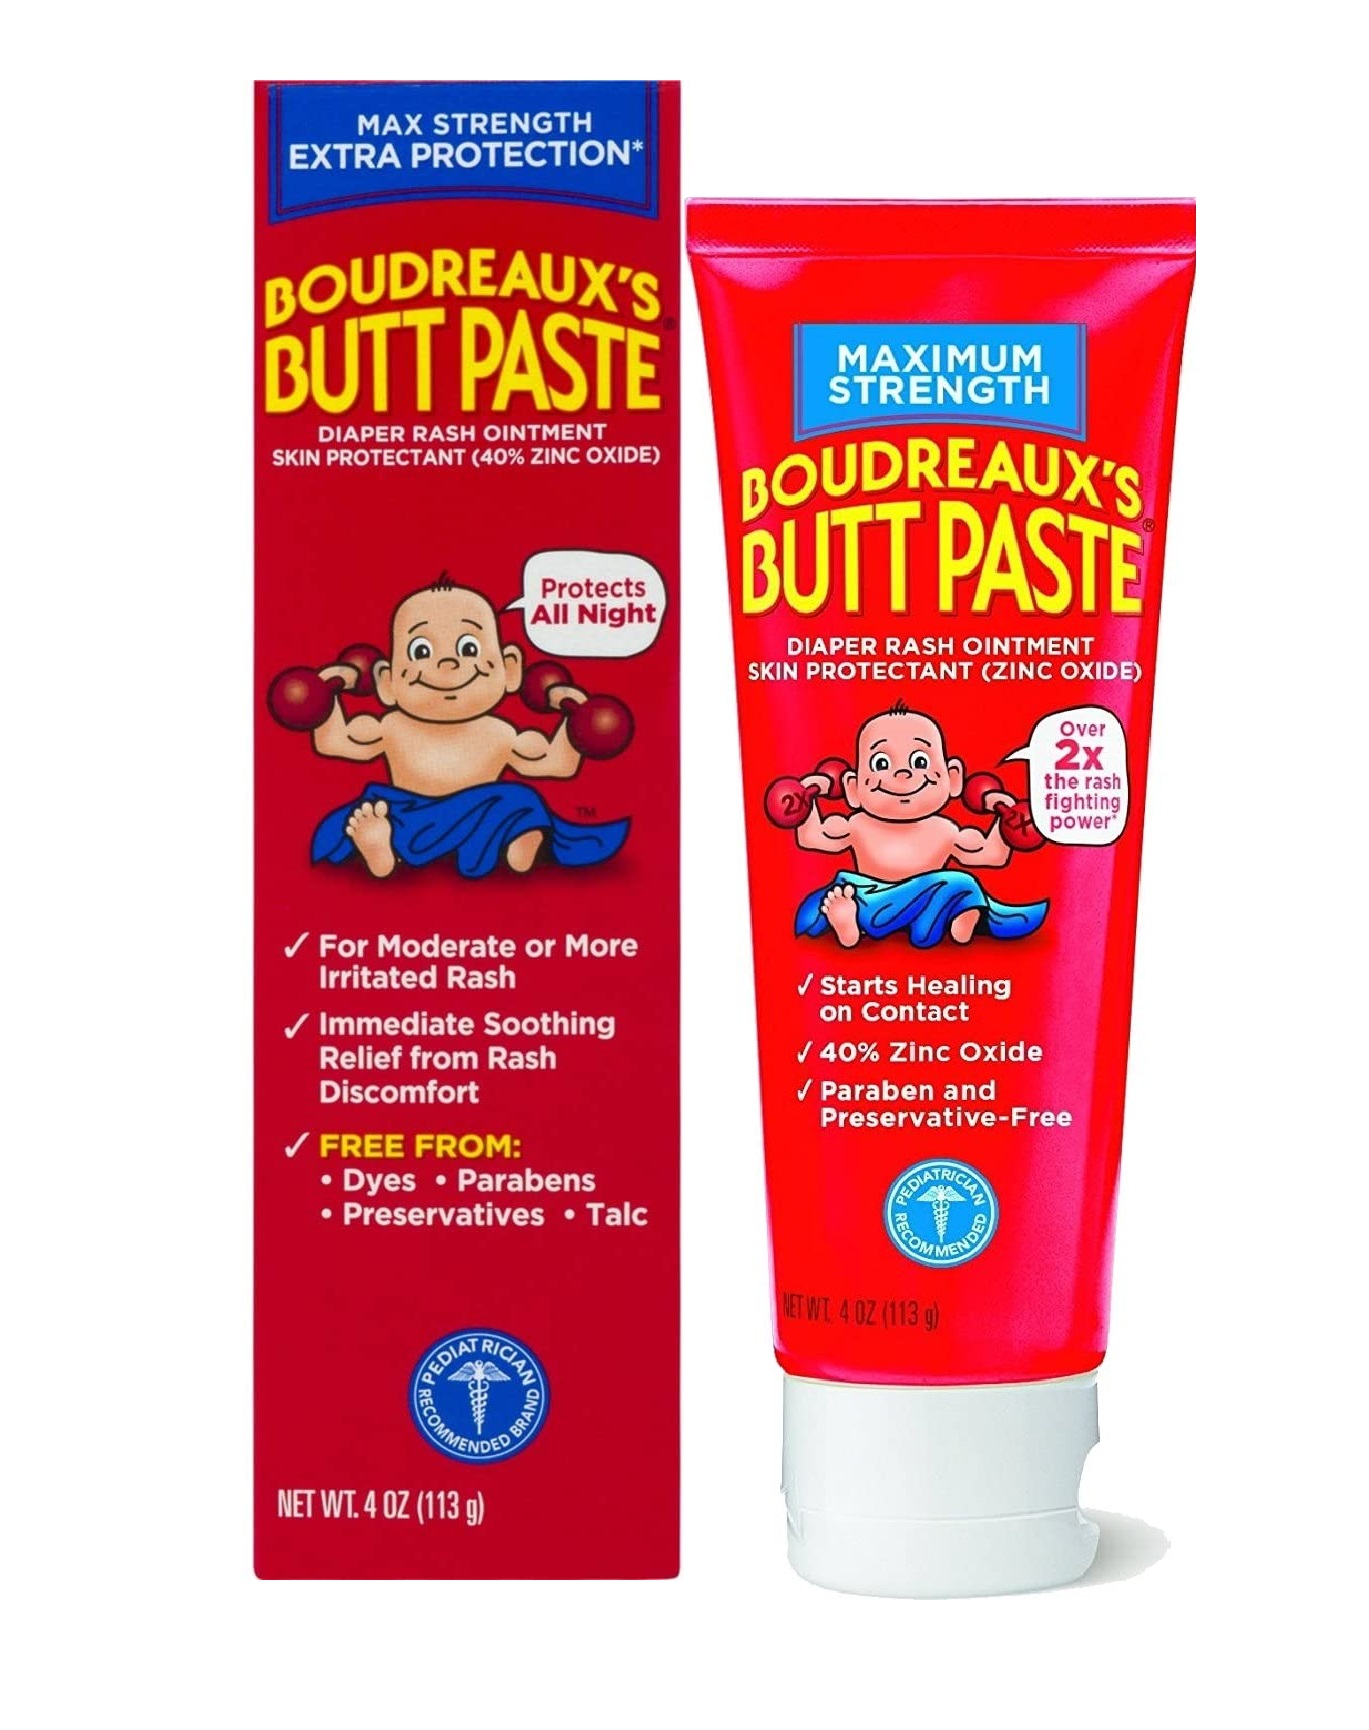 Boudreaux's Max Strength Butt Paste nappy Rash Ointment